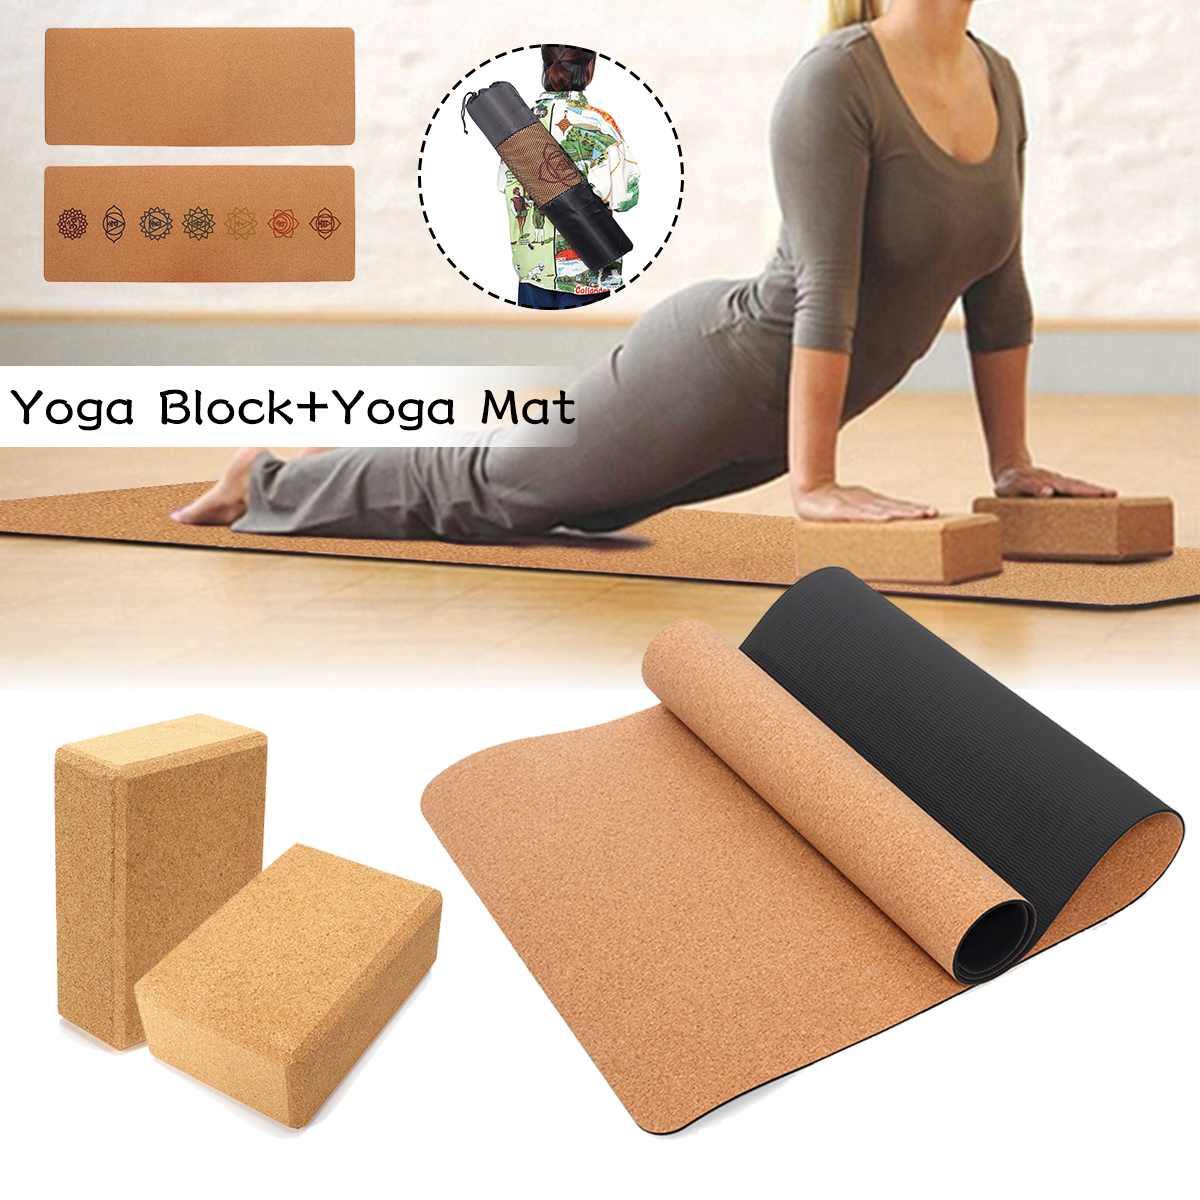 Large Cork Yoga Block, Natural Cork Wood, Eco-friendly, Meditation Block,  Made in Portugal, Vegan Gift 